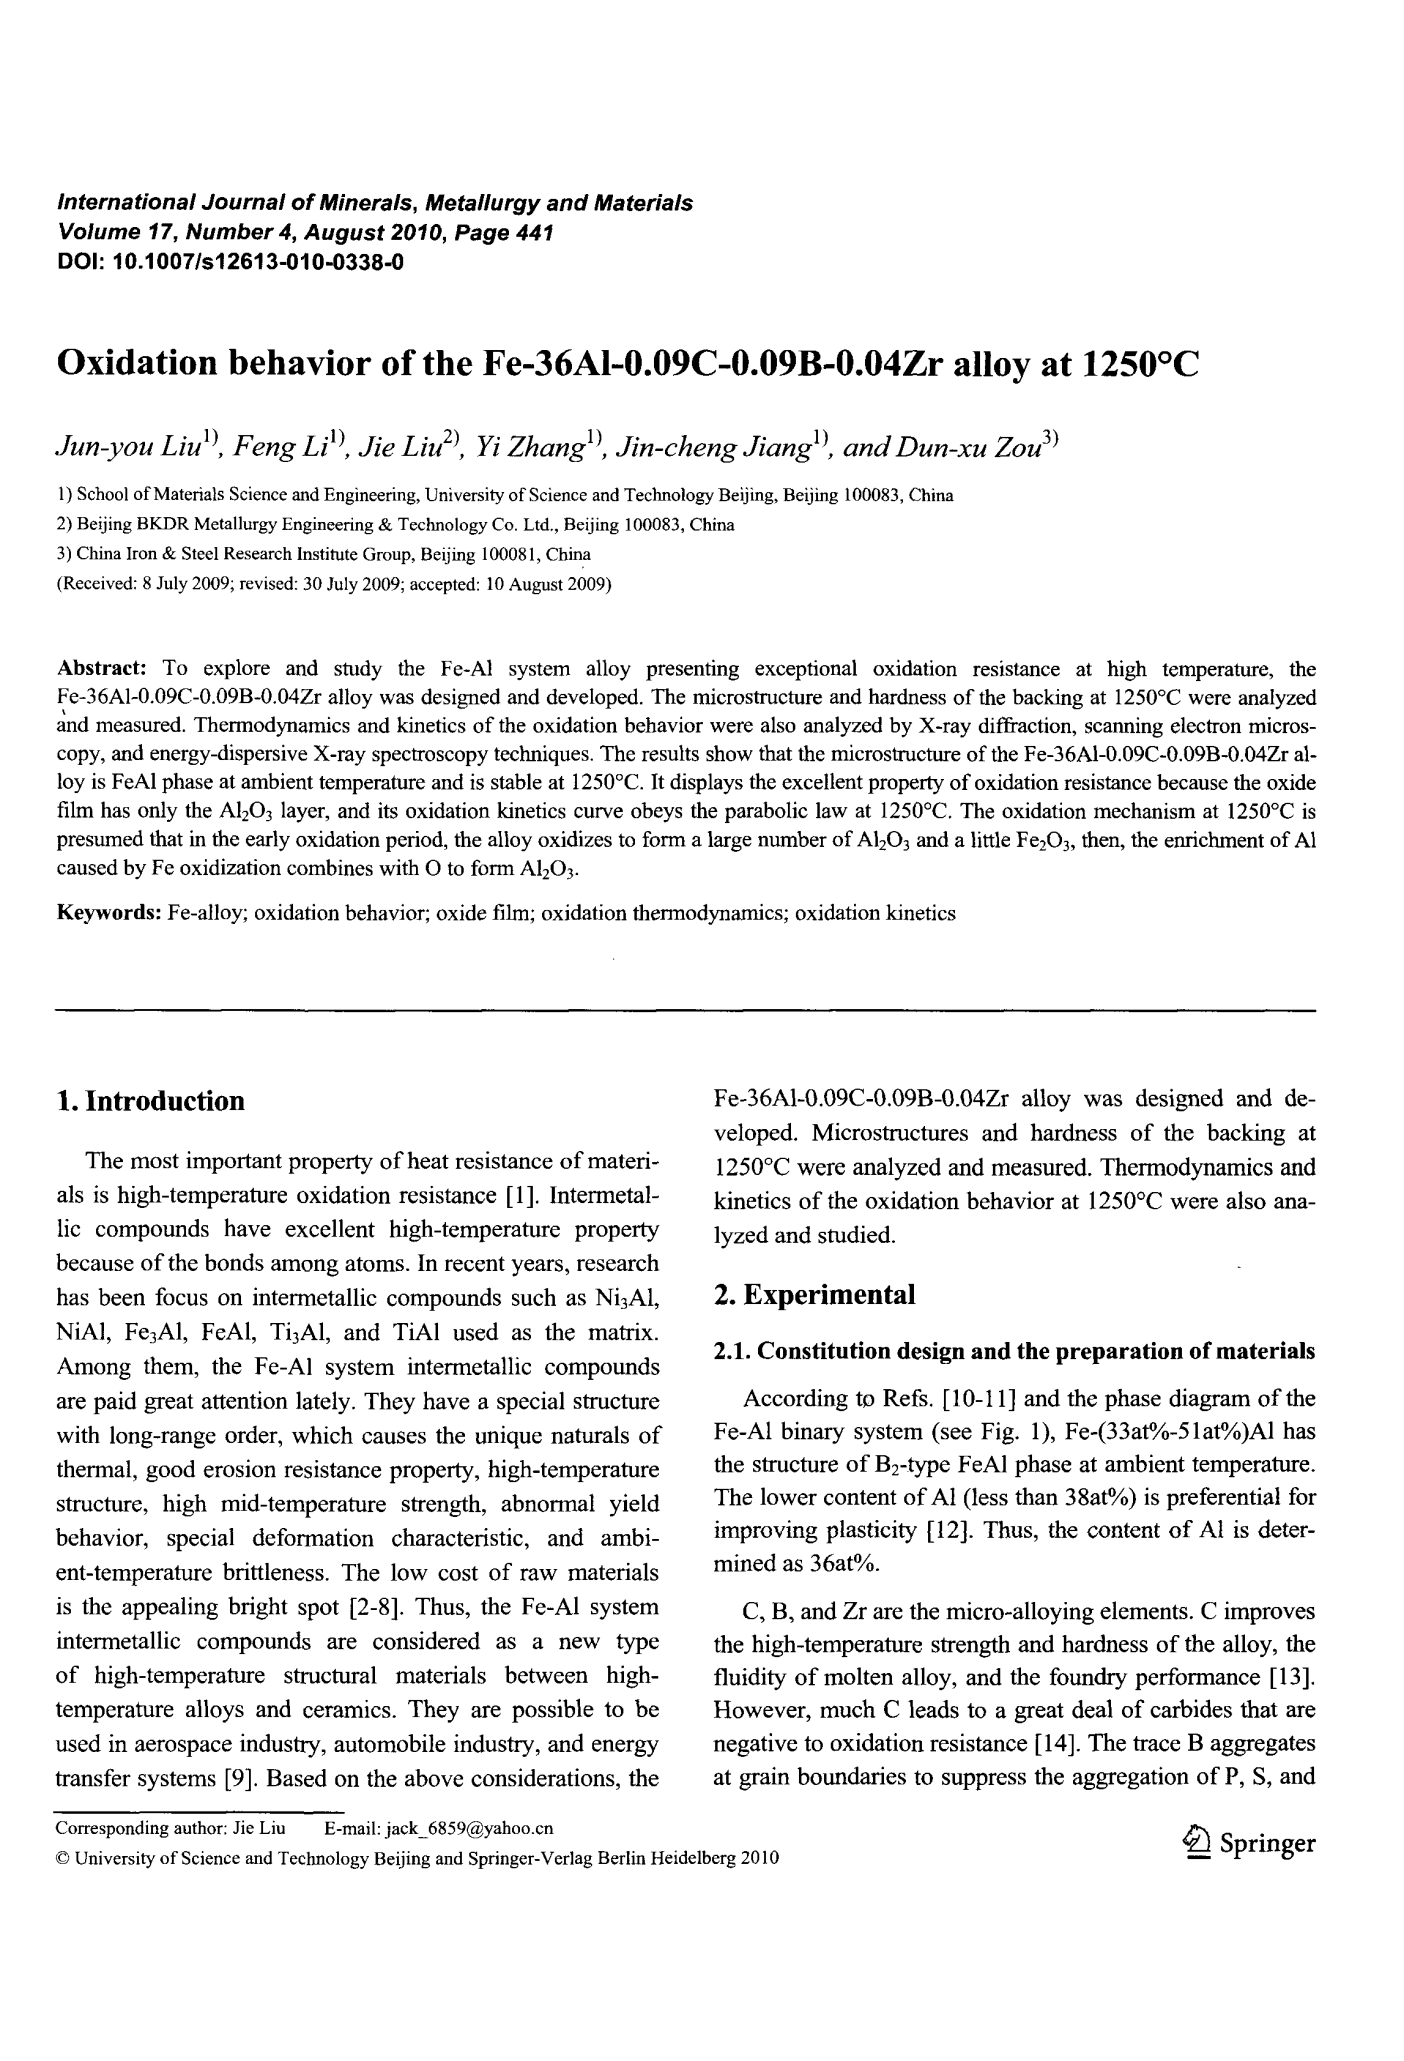 Oxidation behavior of the Fe-36AI-0.09C-0.09B-0.04Zr alloy at 1250℃